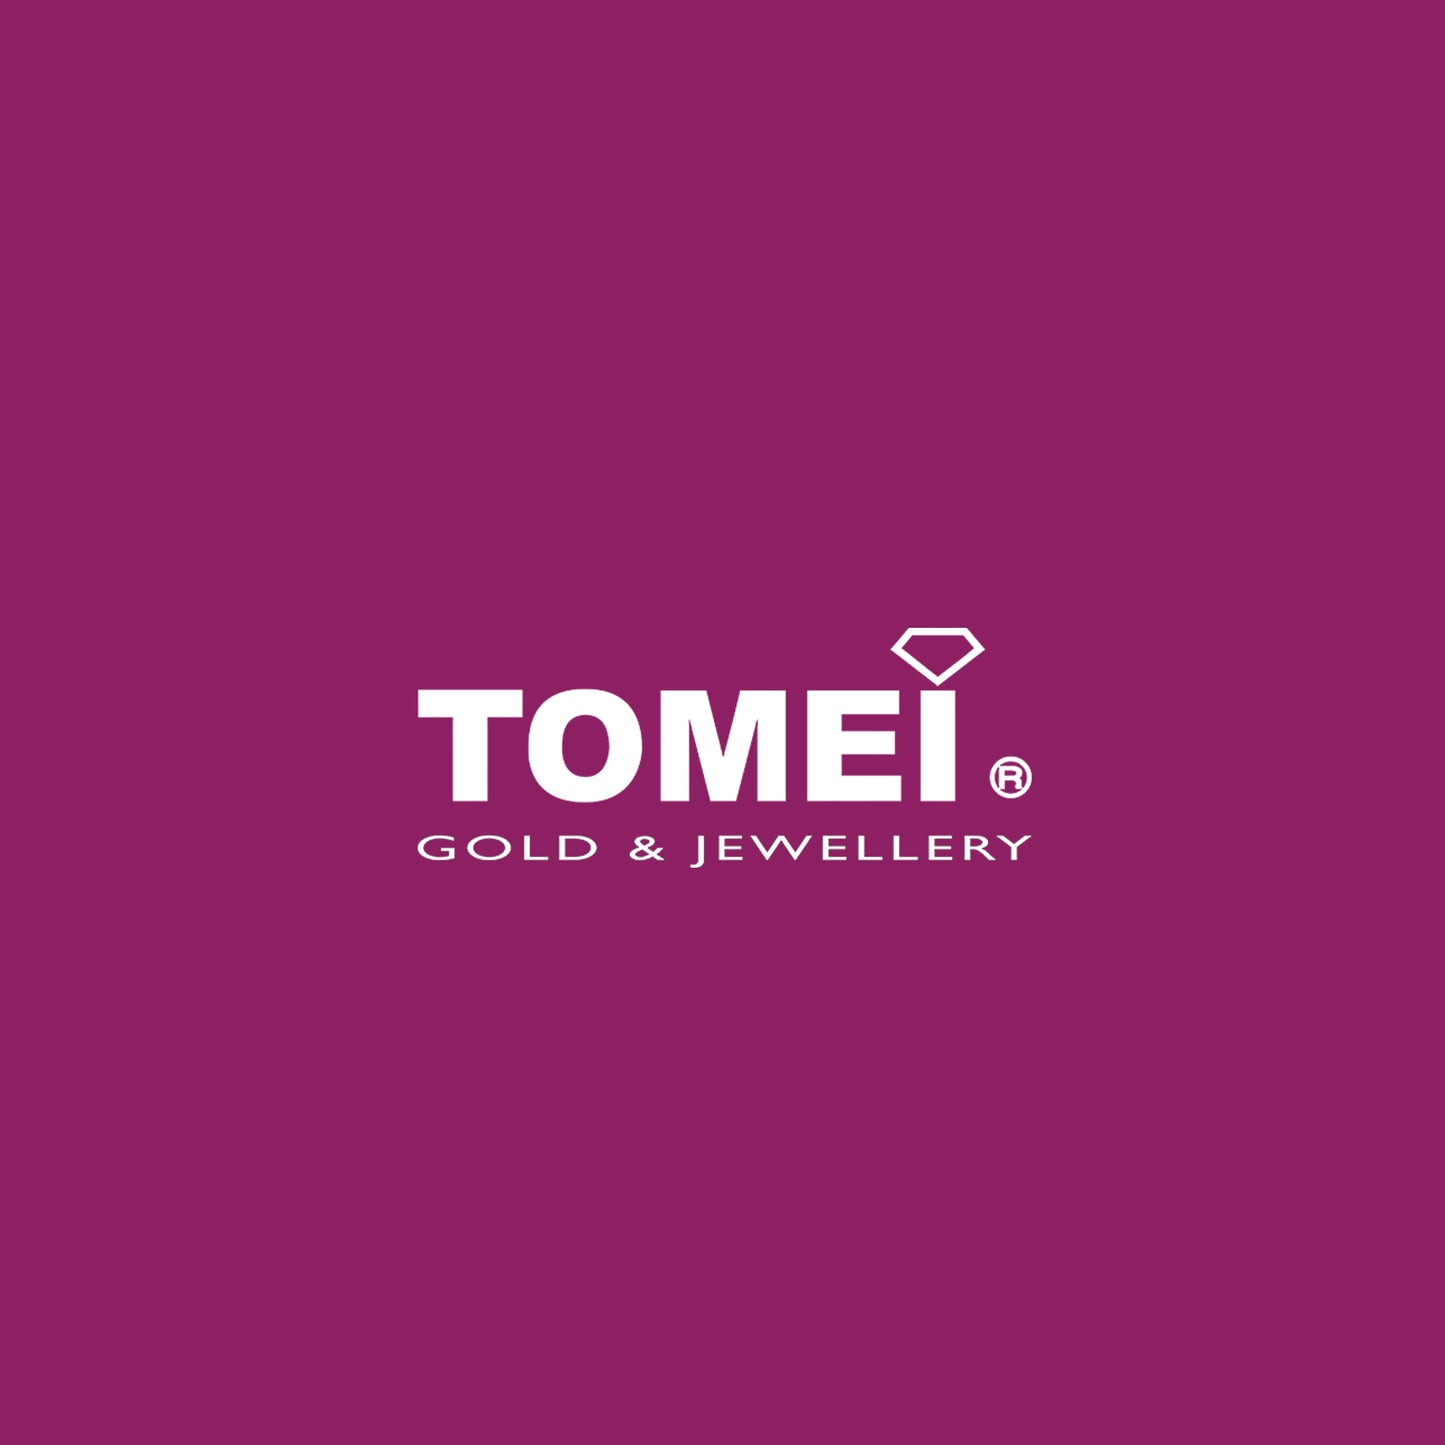 TOMEI Aglitter with Splendorous Verve Ring, Diamond White Gold (R1932)